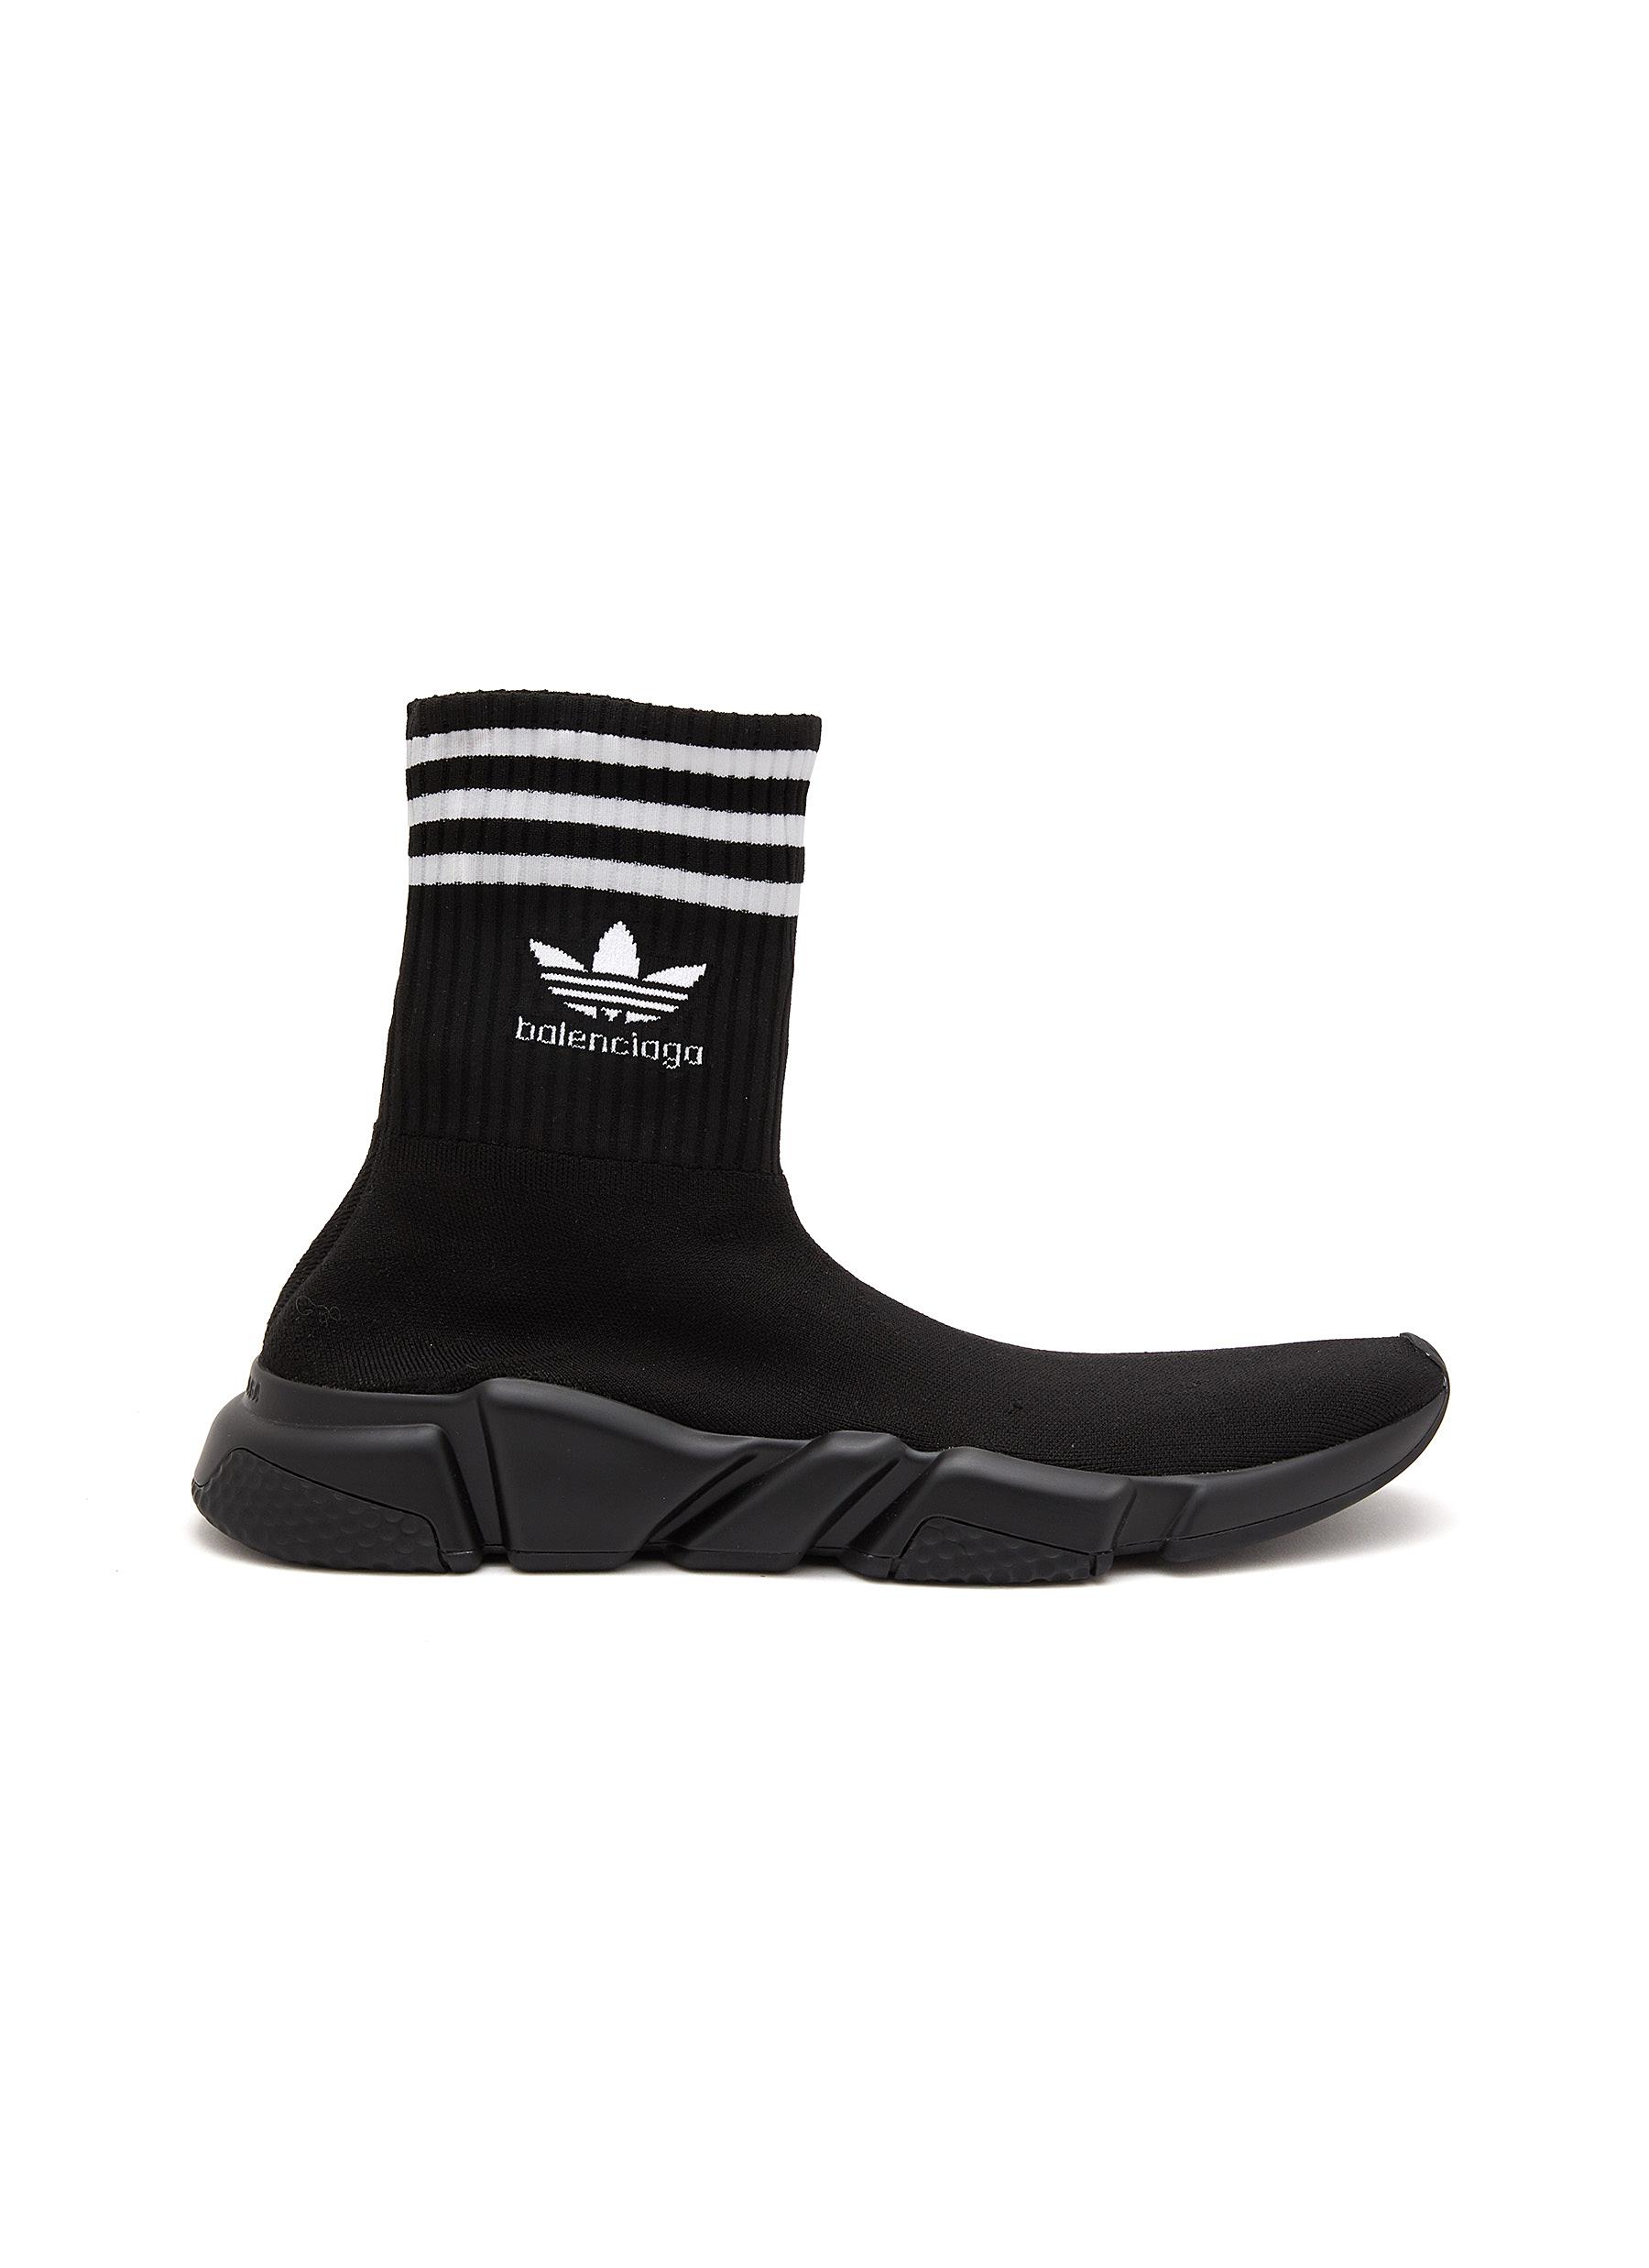 BALENCIAGA x adidas ‘Speed' High Top Sock Sneakers